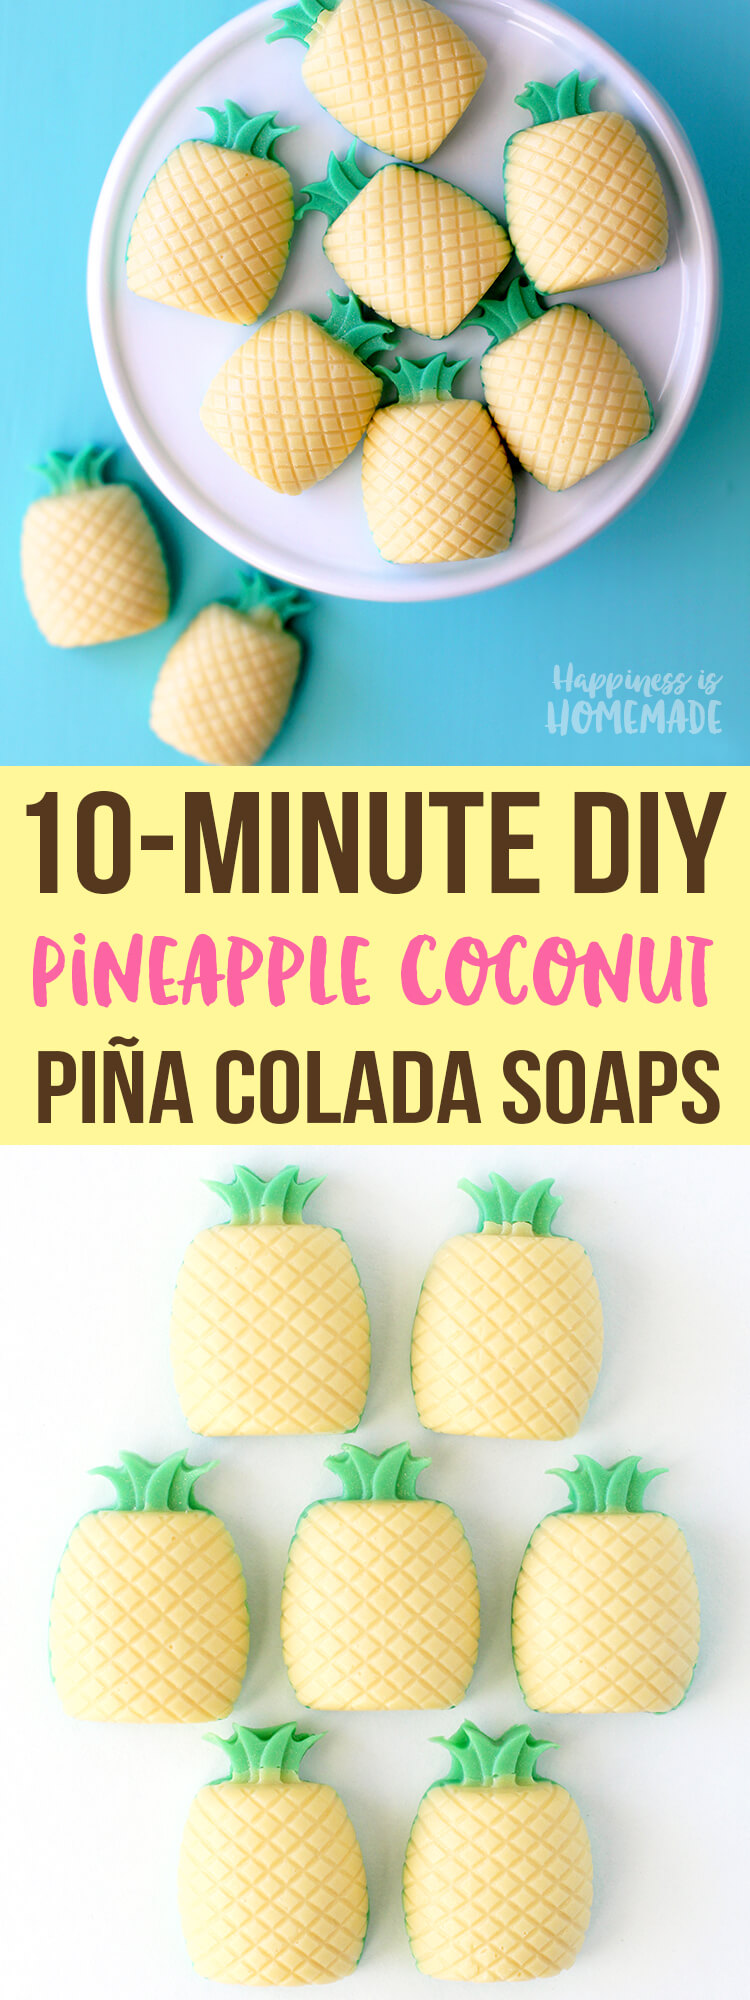 Pina Colada Pineapple Coconut Soap - 10 Minute DIY